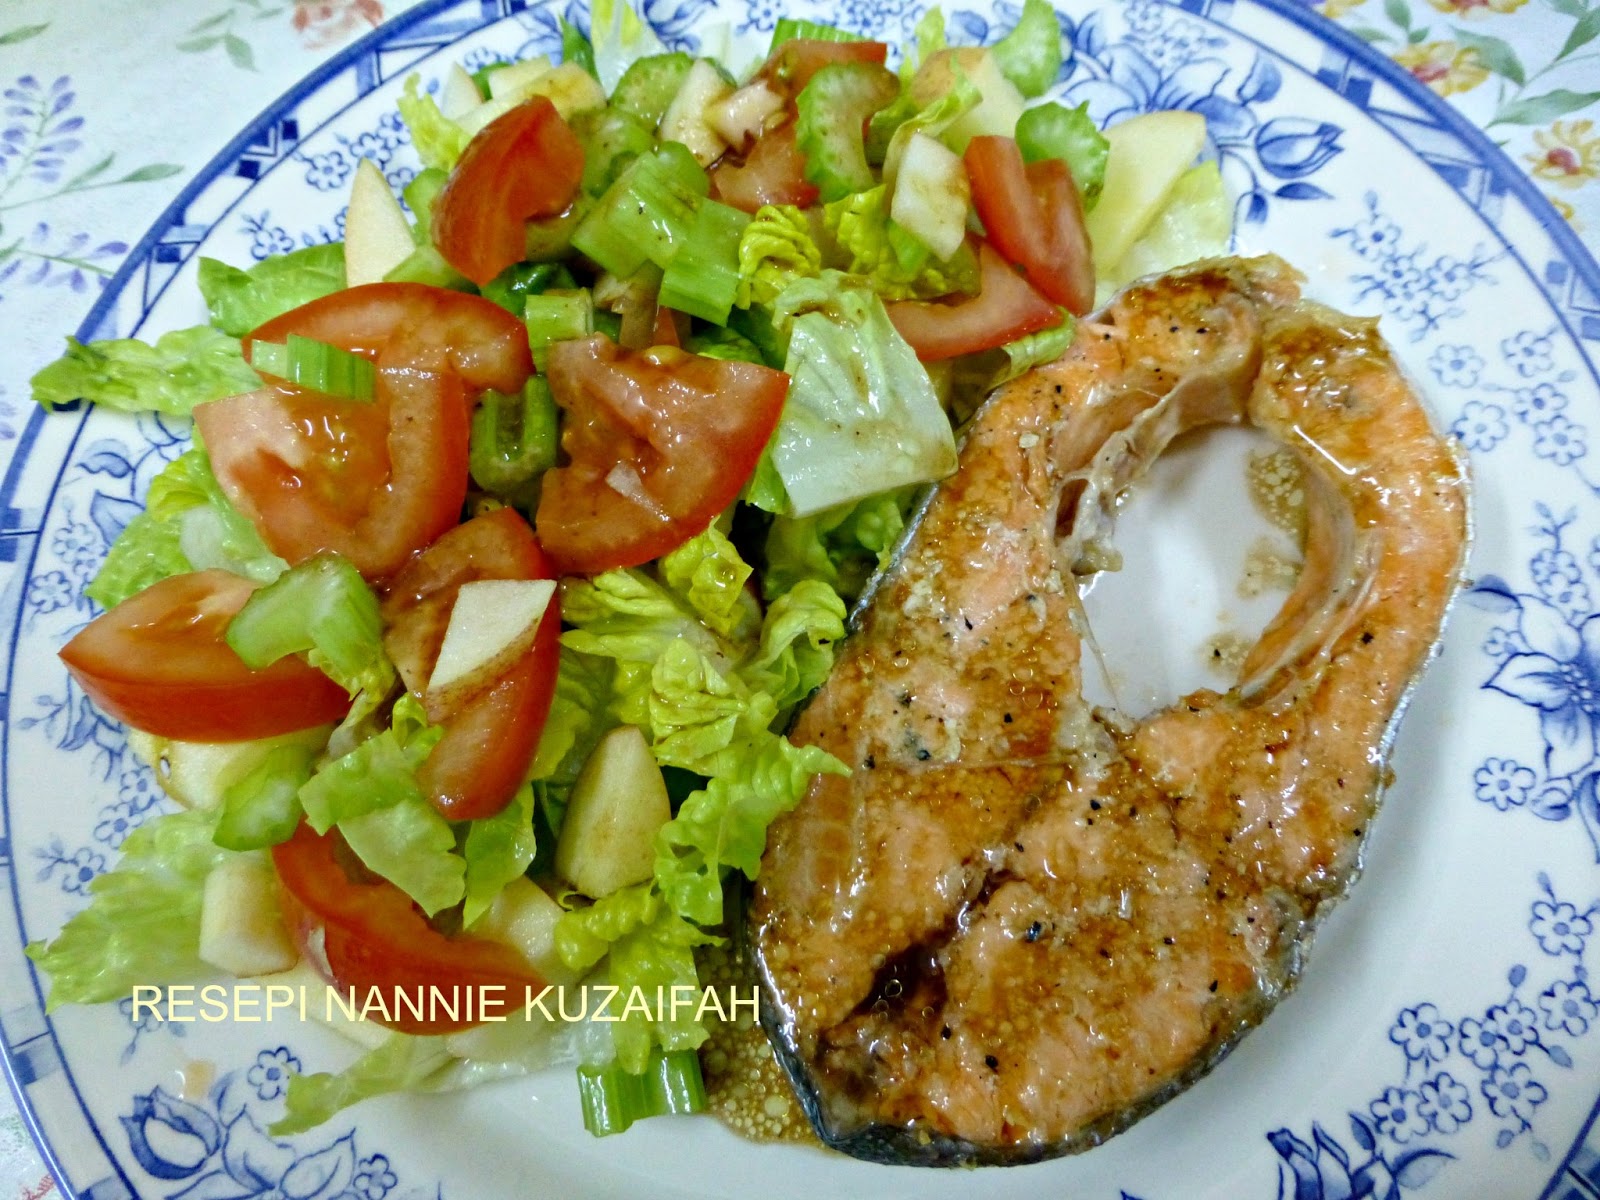 RESEPI NENNIE KHUZAIFAH: Salmon grill & salad